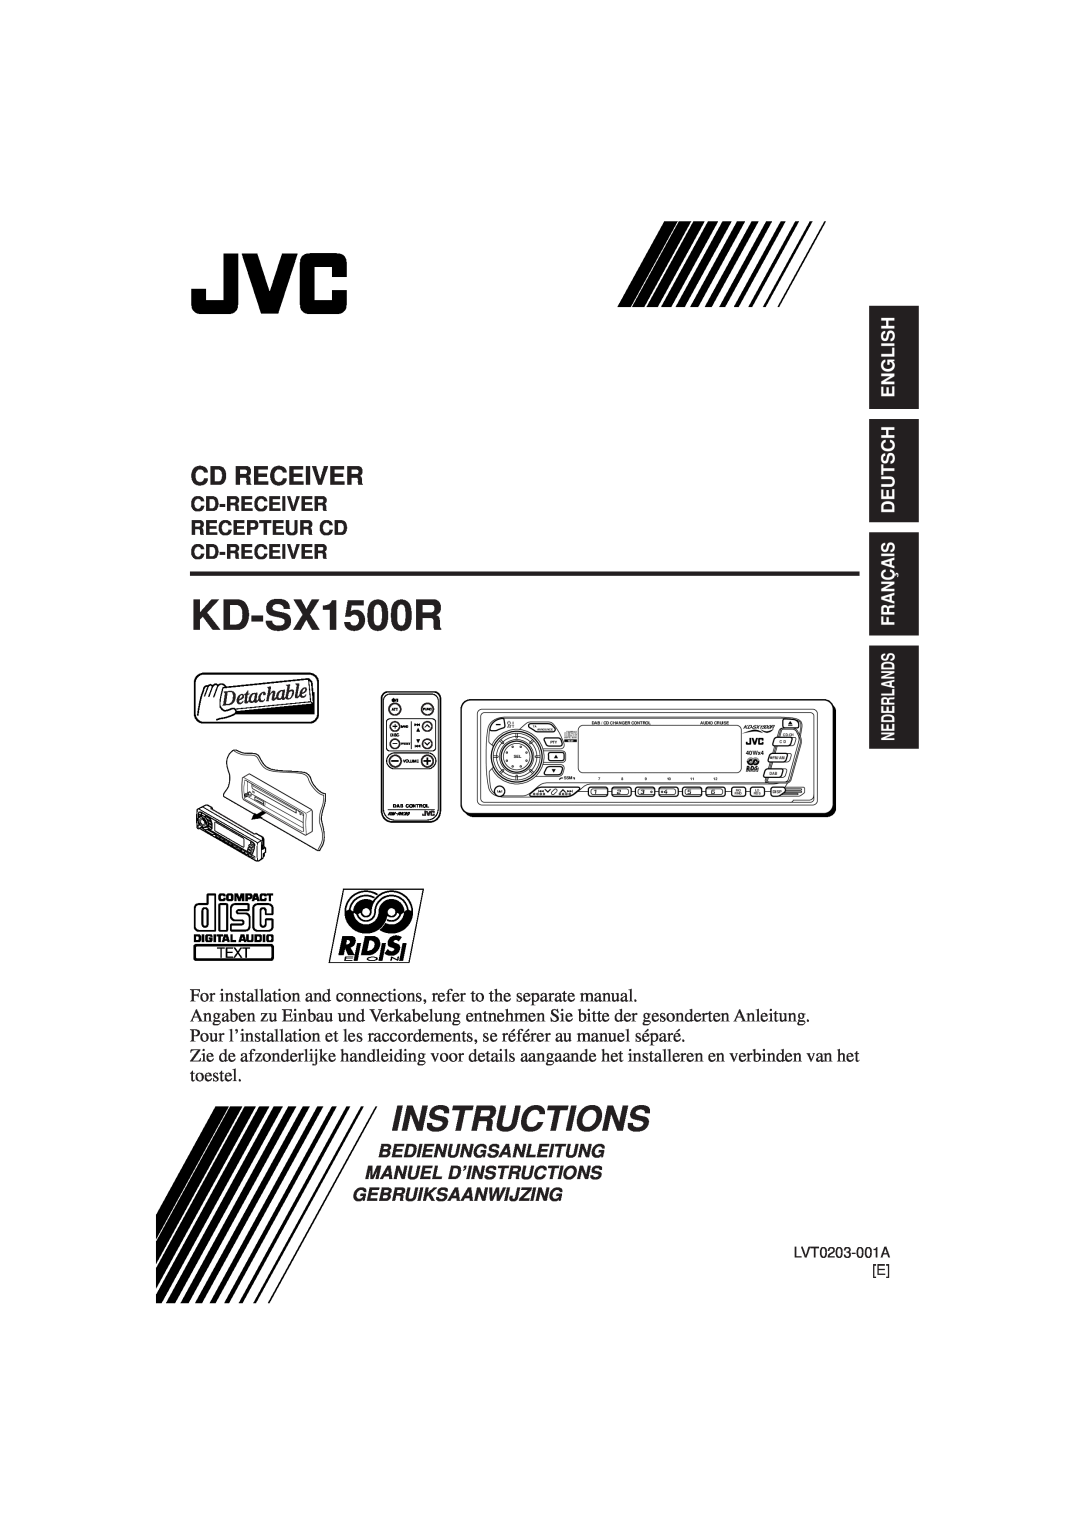 JVC KD-SX1500R manual Instructions, Cd-Receiver Recepteur Cd Cd-Receiver, Nederlands Français Deutsch English, Cd Receiver 